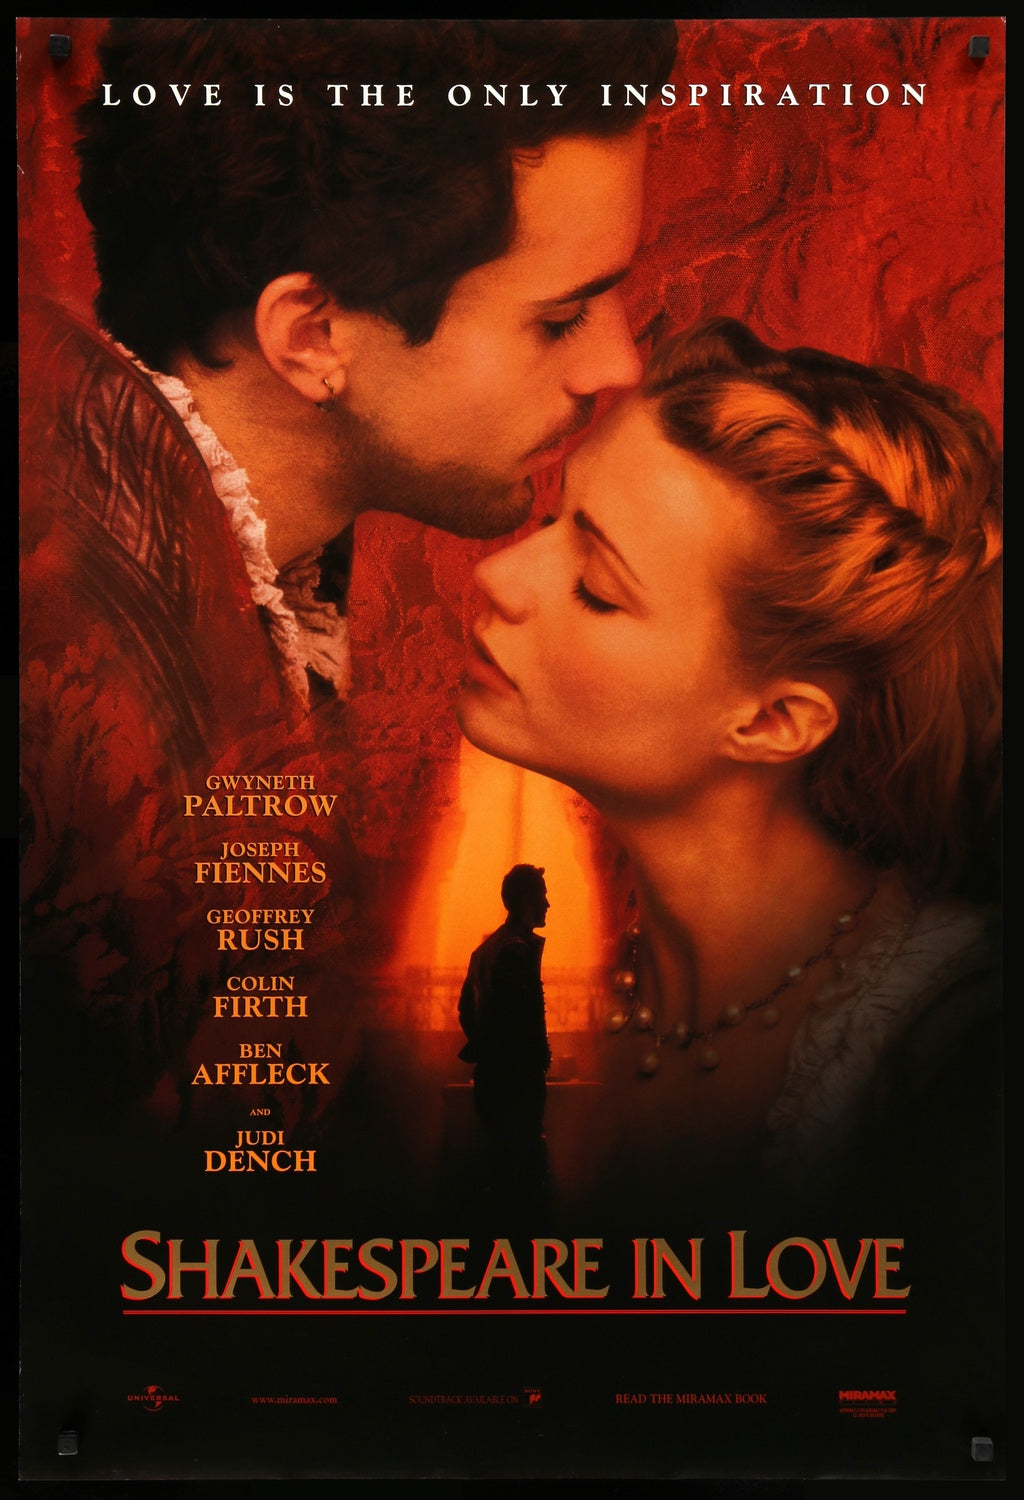 Shakespeare in Love (1998) original movie poster for sale at Original Film Art